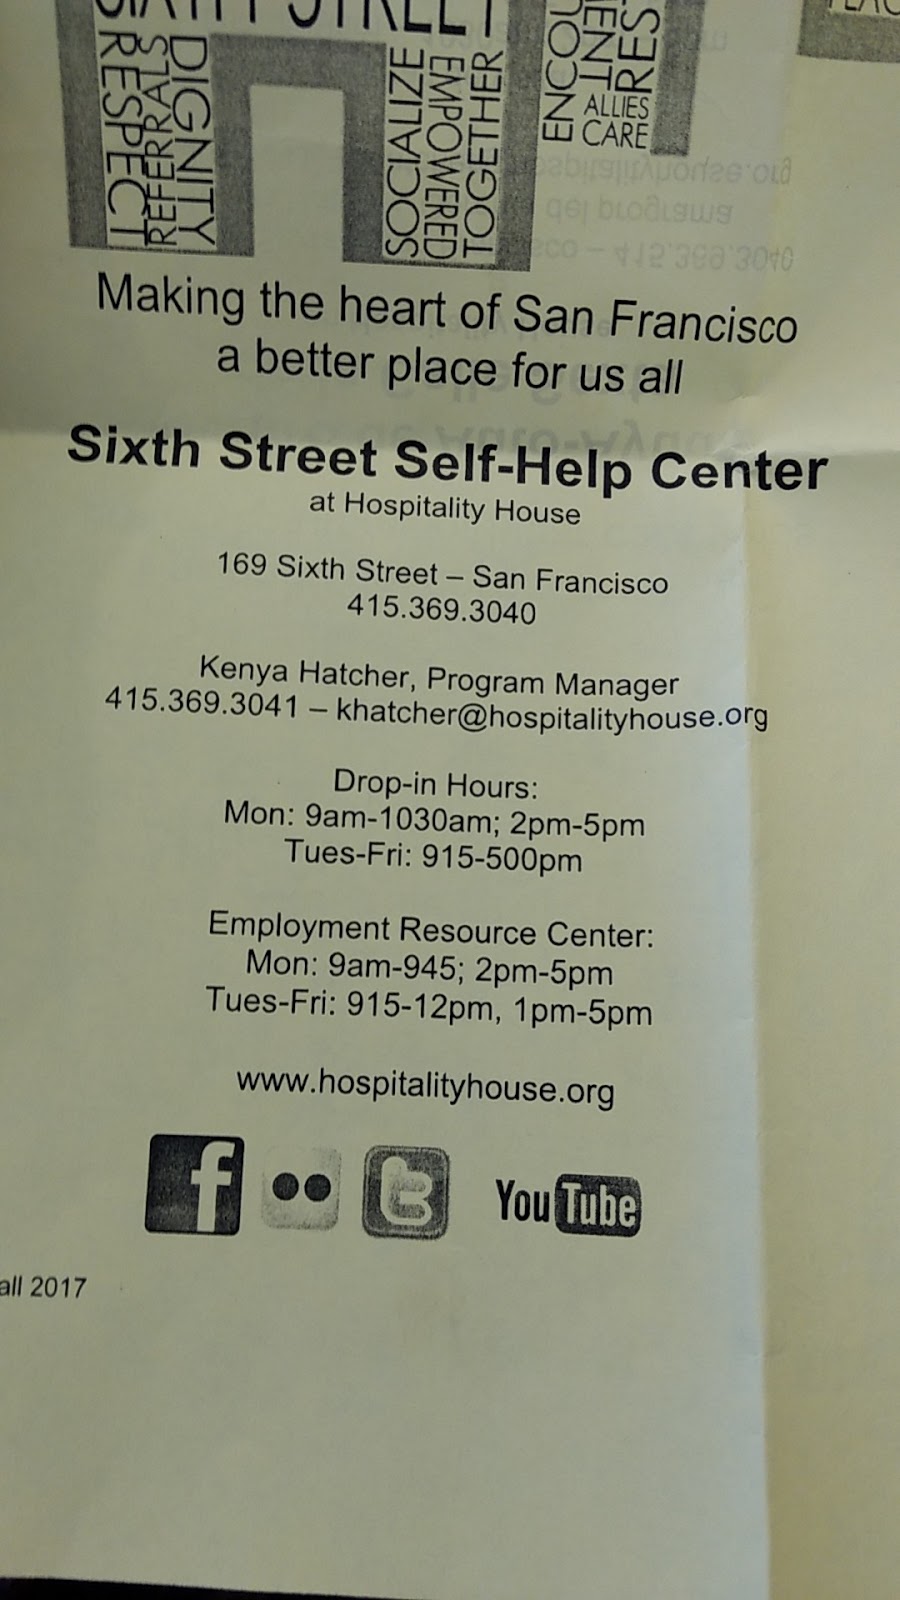 Hospitality House - The Sixth Street Self Help Center